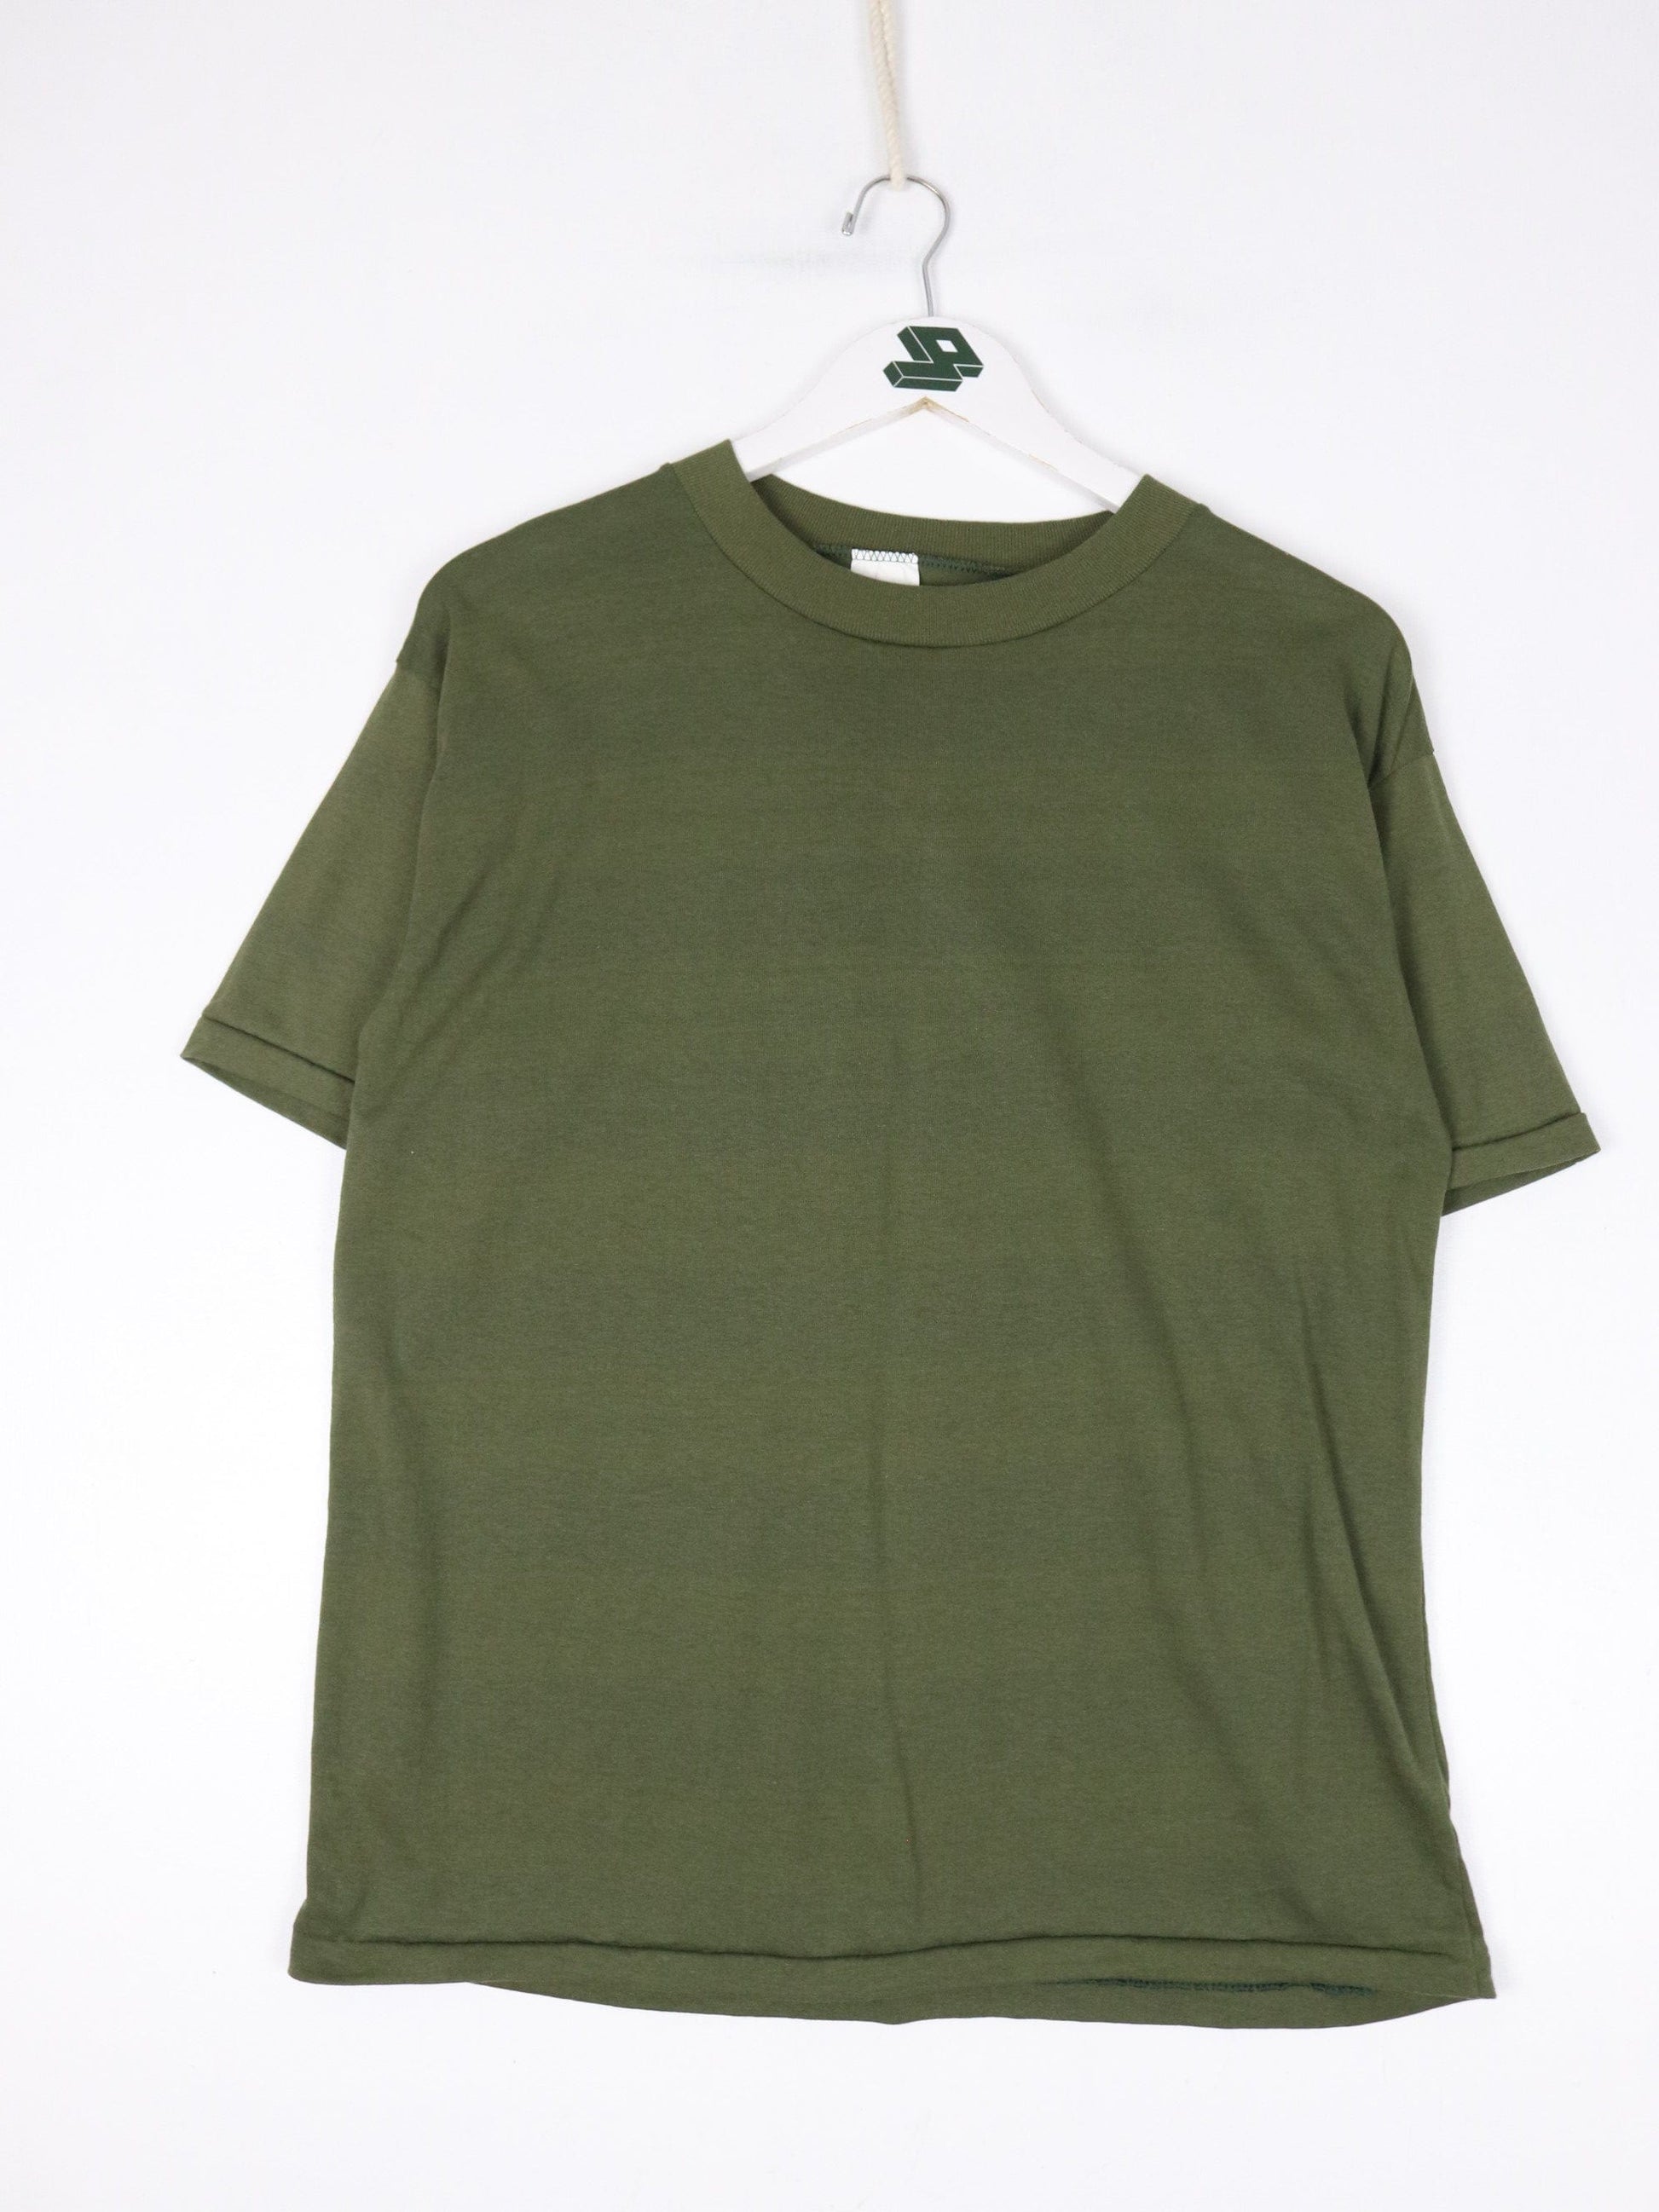 Other T-Shirts & Tank Tops Vintage Blank T Shirt Mens Medium Army Green 90s